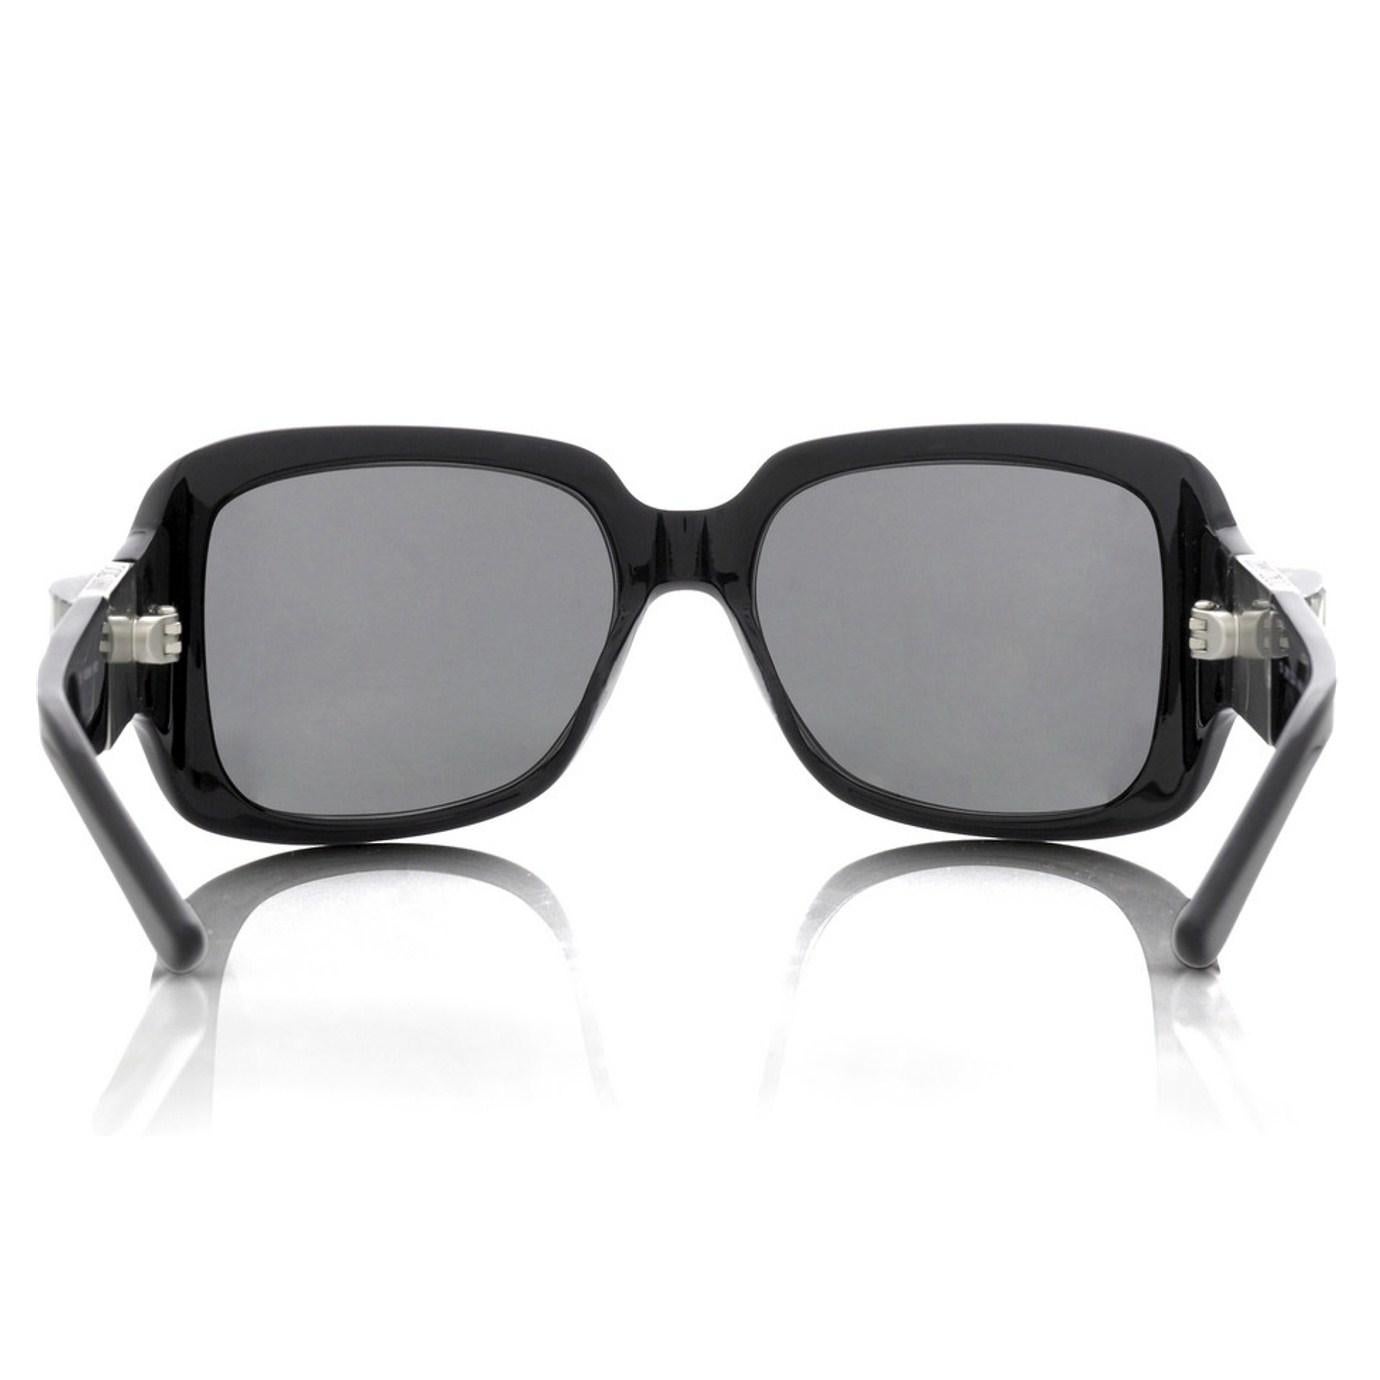 New Jimmy Choo Swarovski Sunglasses With Case & Box $595 In New Condition In Leesburg, VA